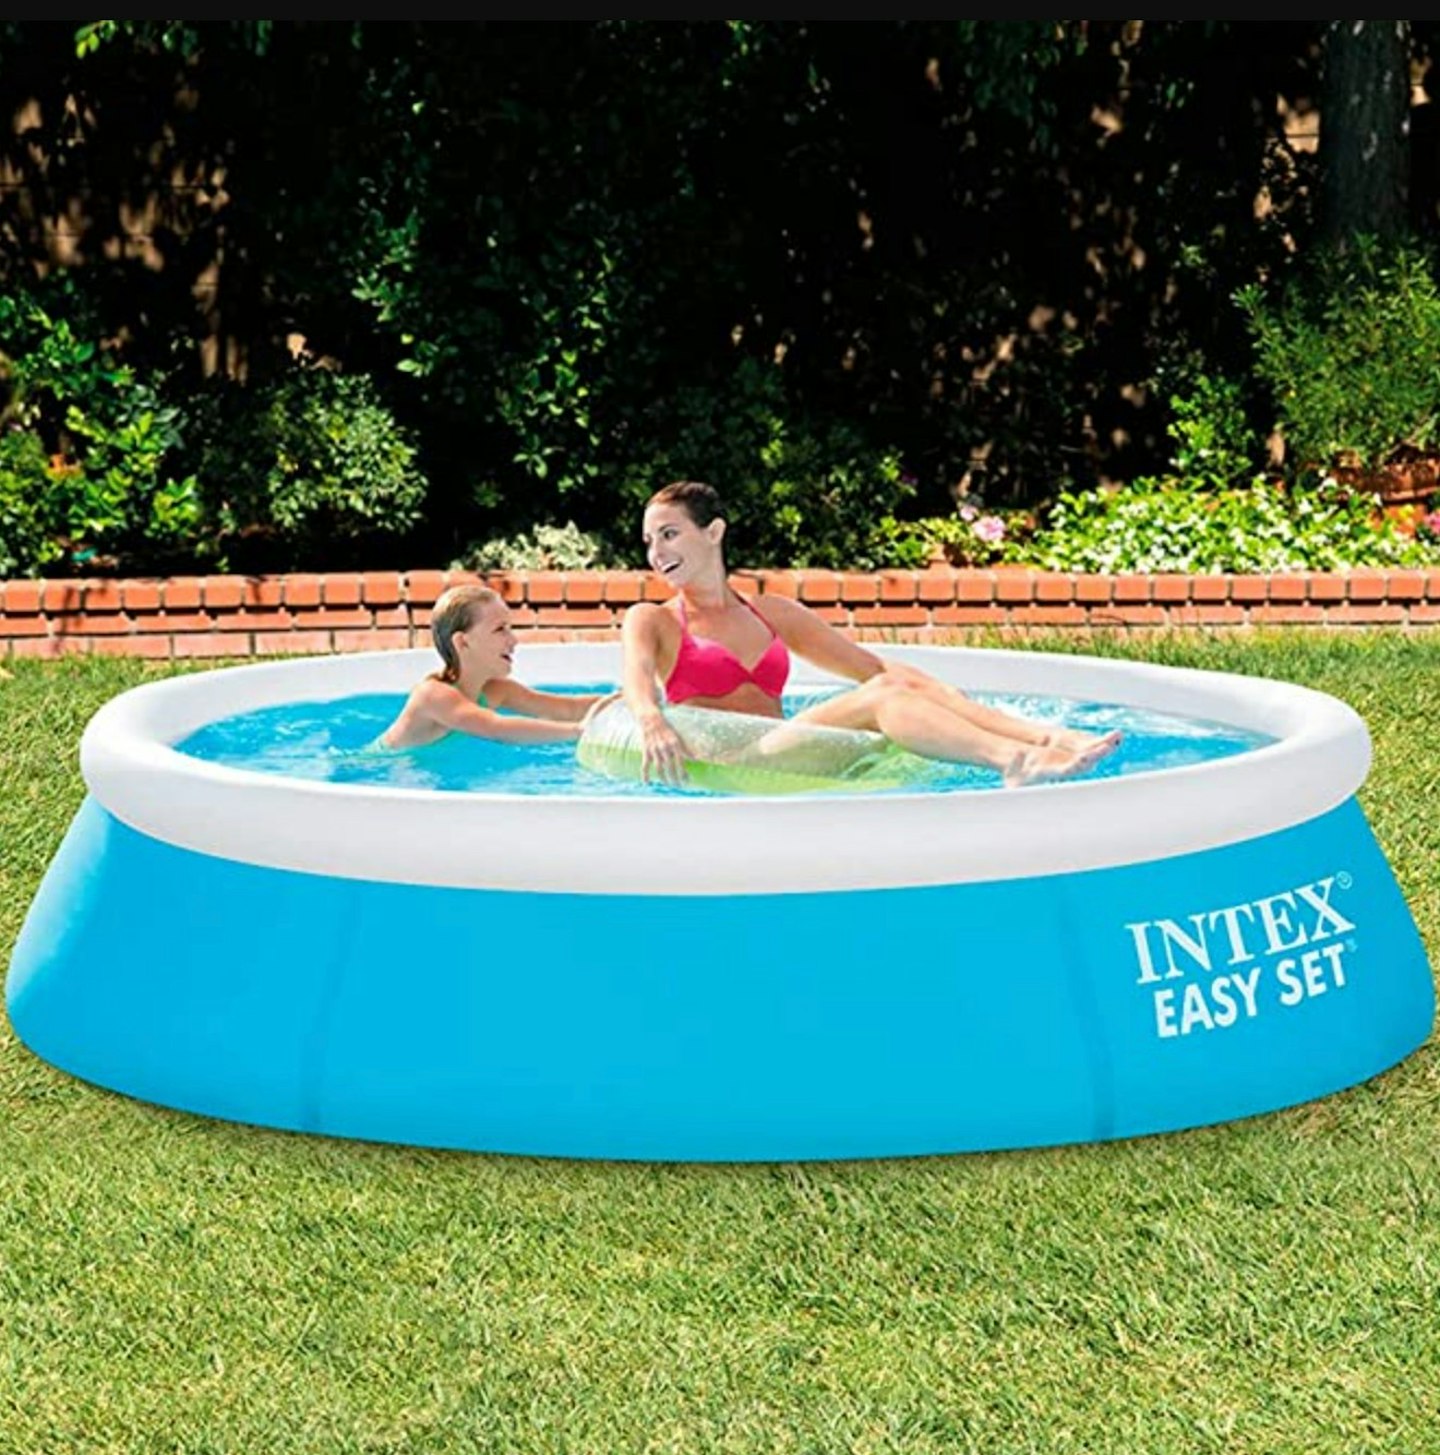 Intex 6ft x 20in Easy Set Swimming Pool